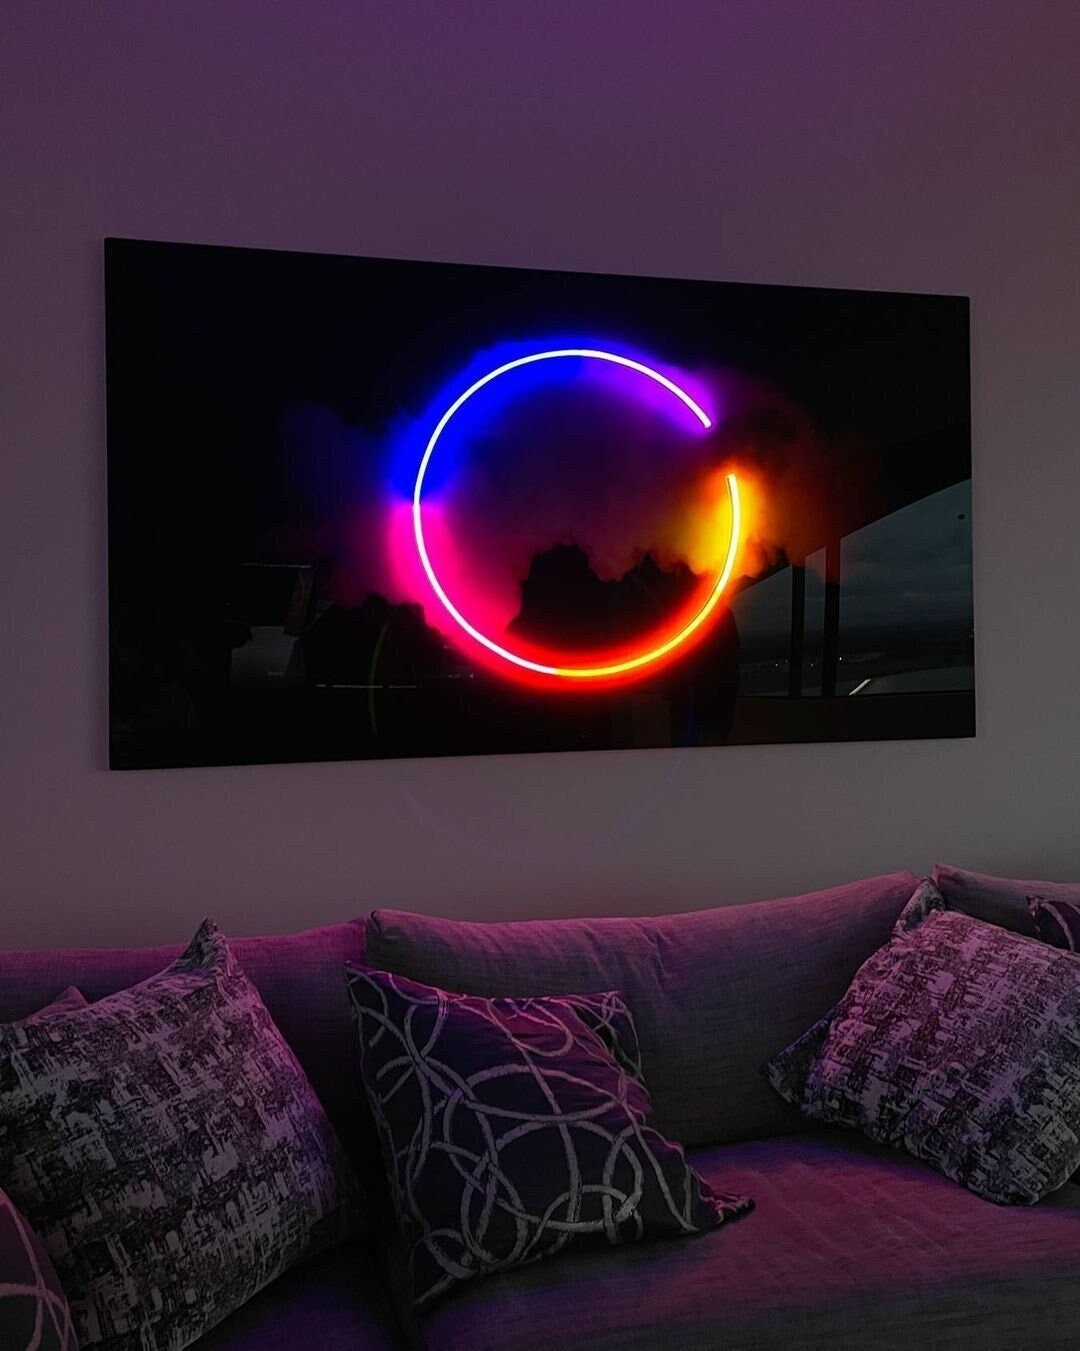 Leinwandbild Pfeile LED Lichter Neon-Licht Coole hippe moderne